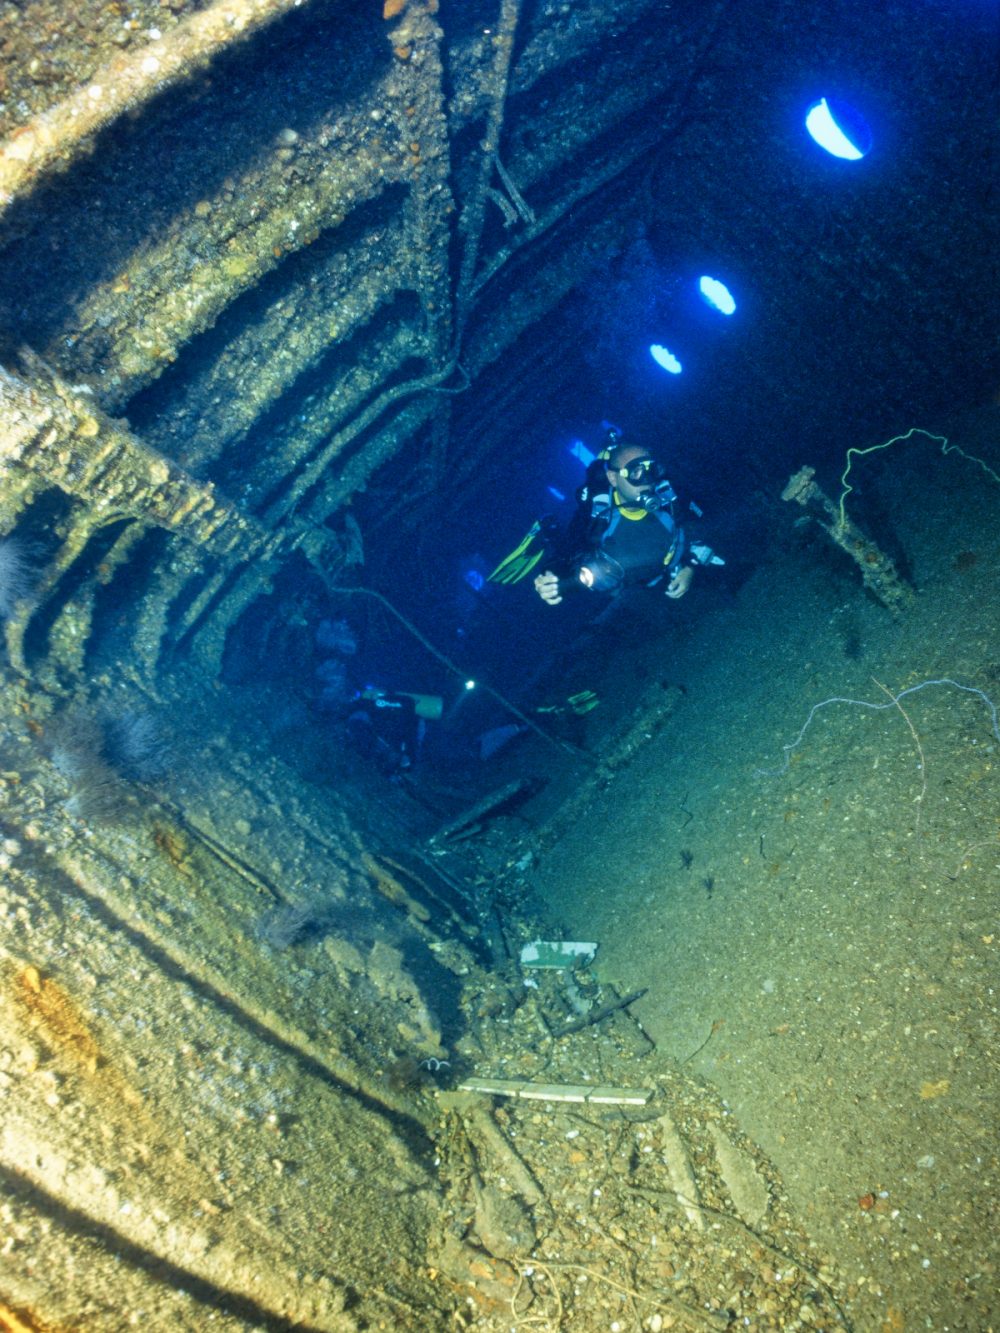 EGYPT, Red Sea, scuba divers inside the wreck of a sunken ship